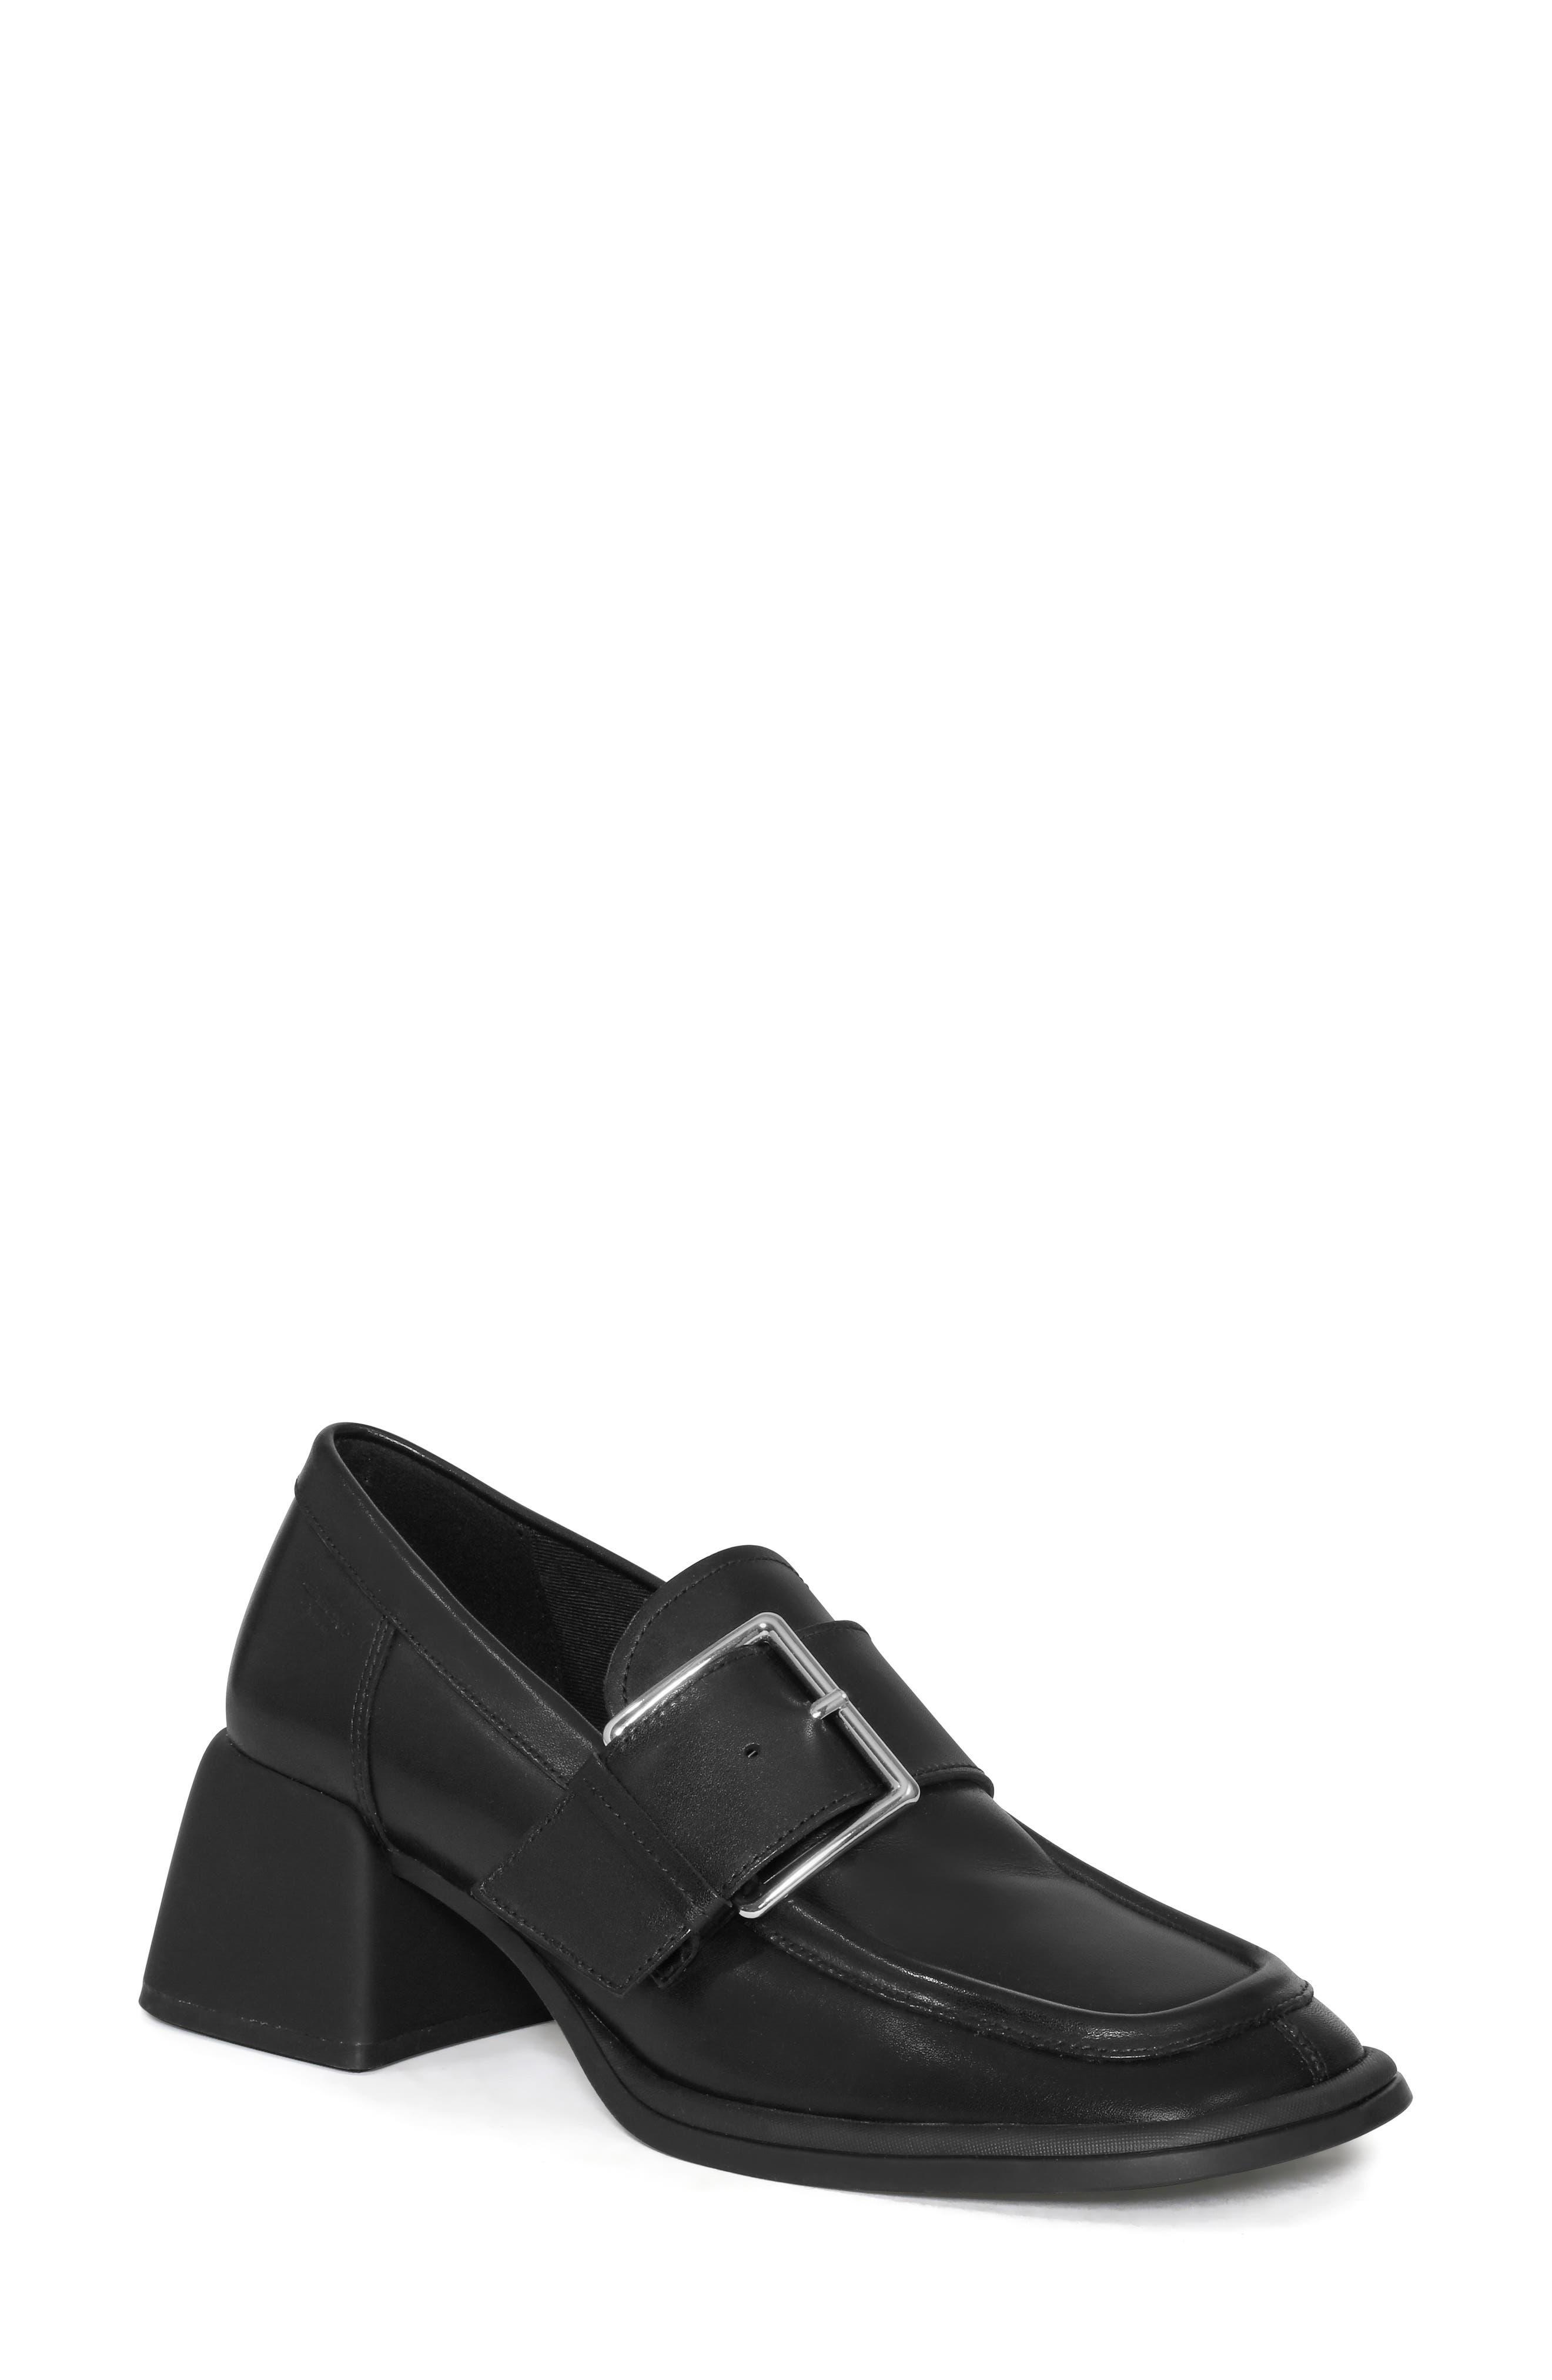 Vagabond Shoemakers Ansie Buckle Loafer in Black | Lyst